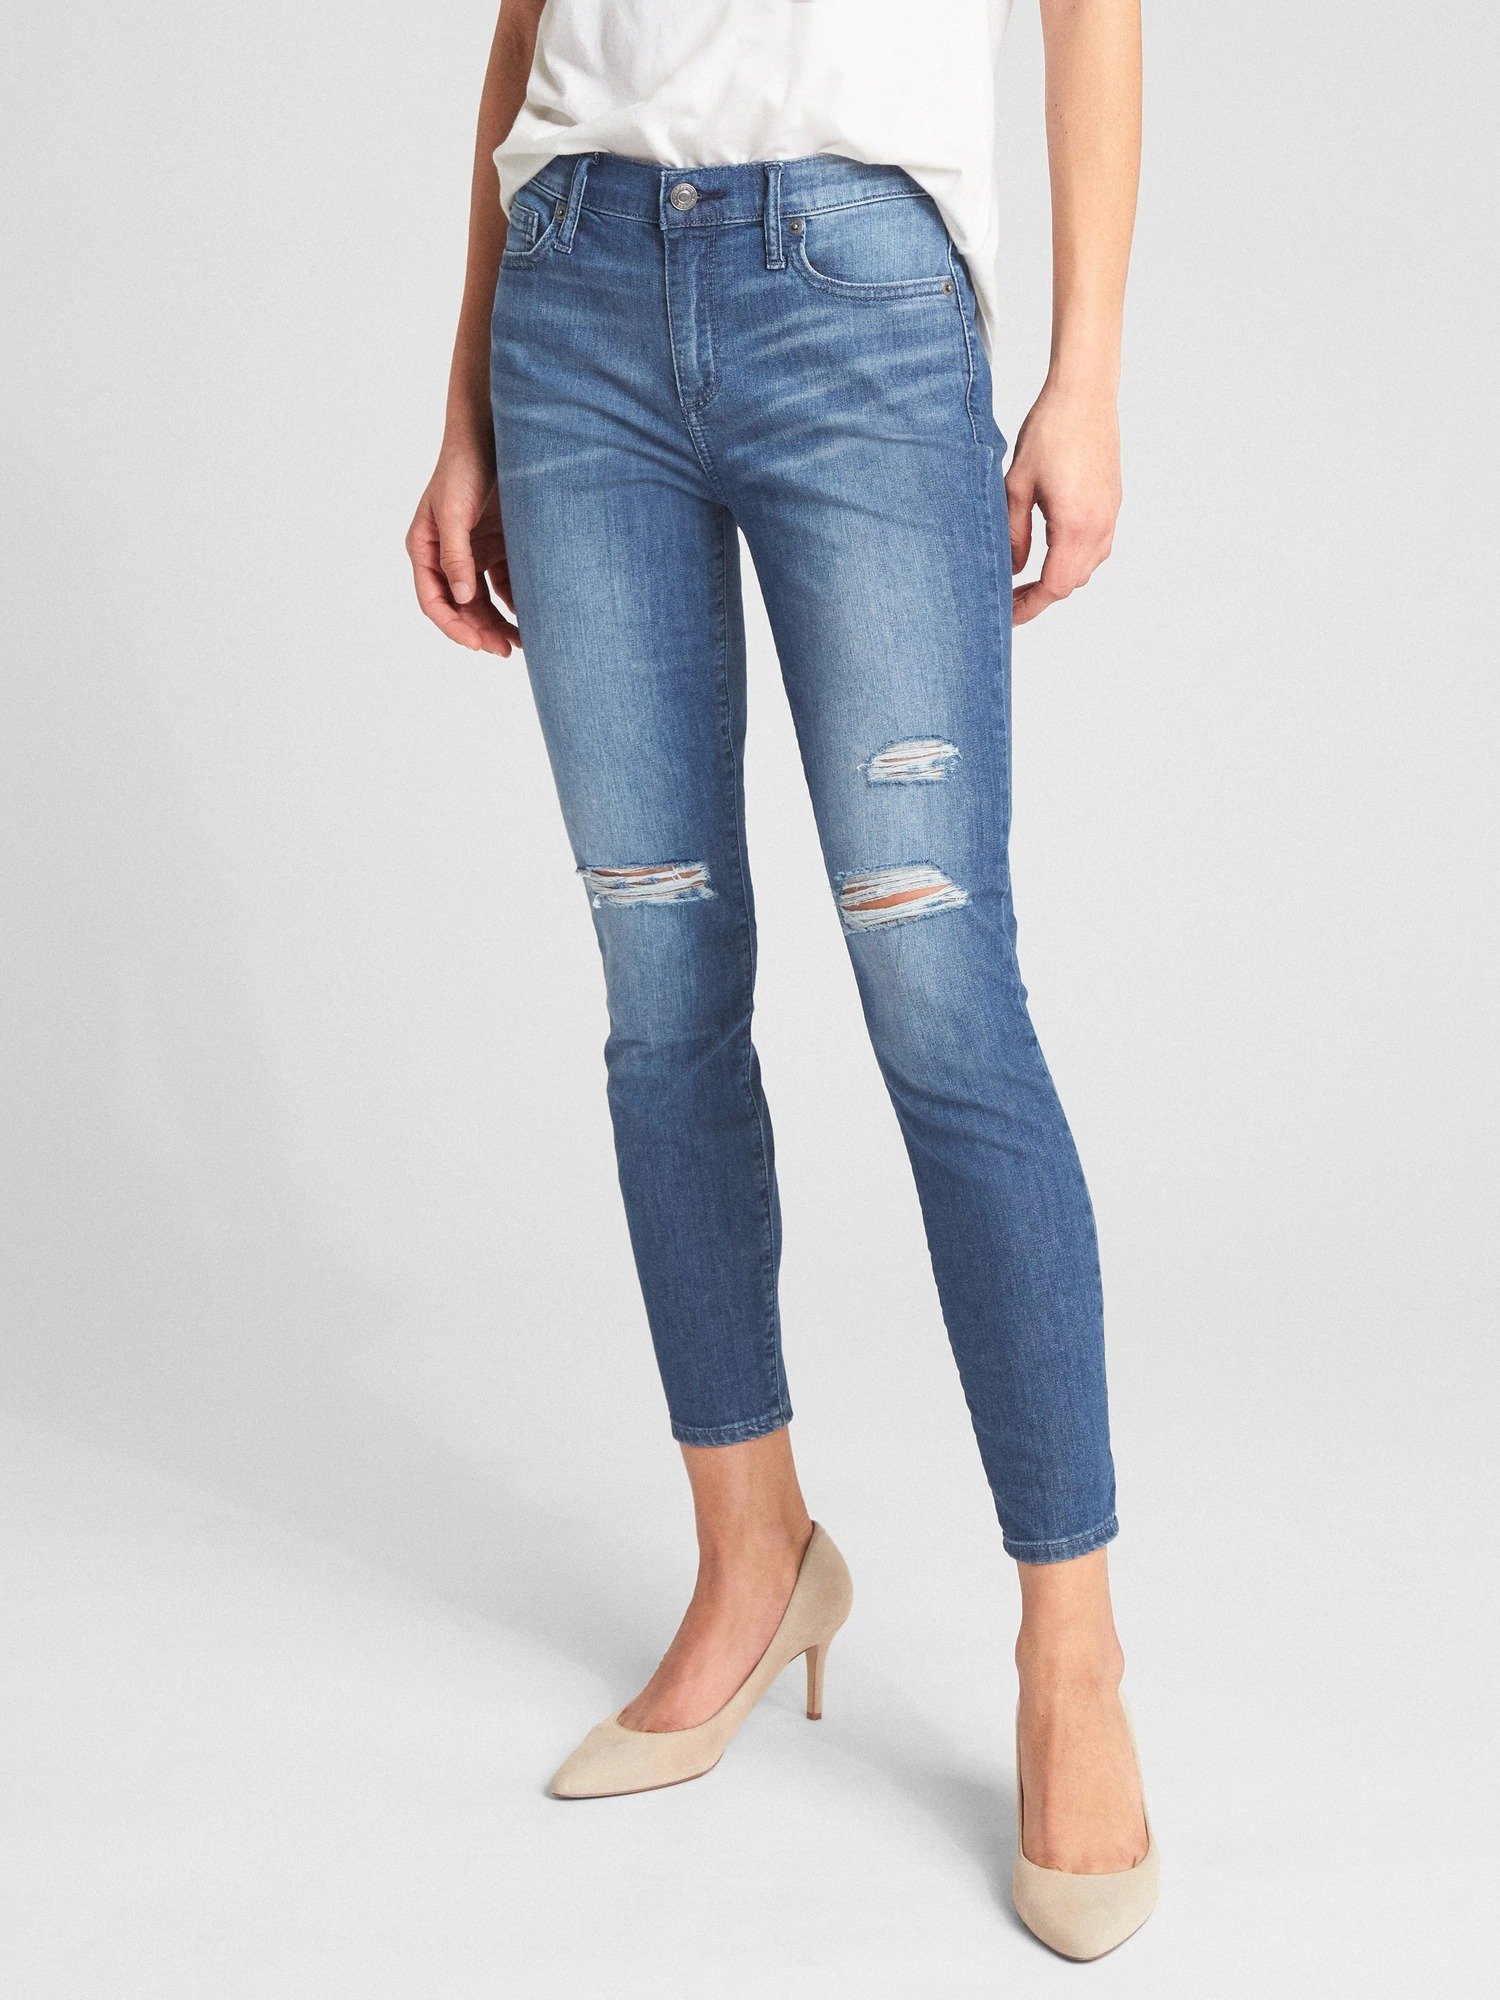 Wearlight orta belli true skinny jean pantolon product image